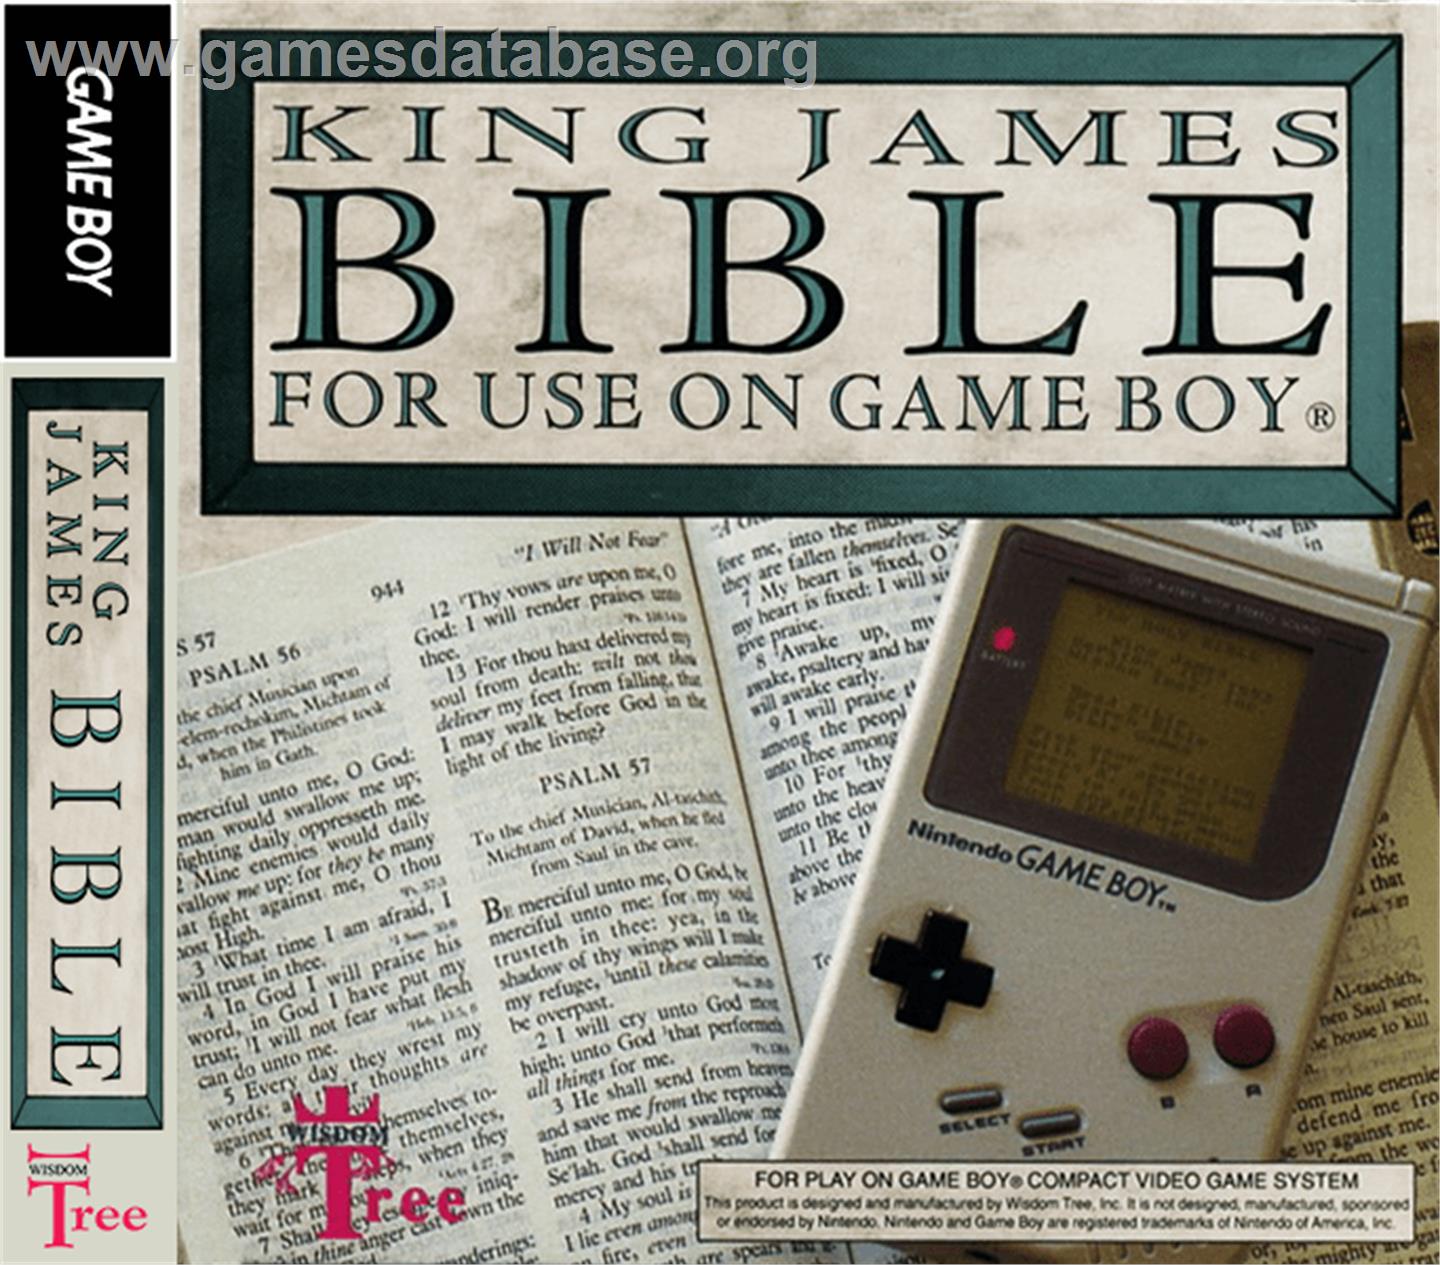 King James Bible For Use On Game Boy - Nintendo Game Boy - Artwork - Box